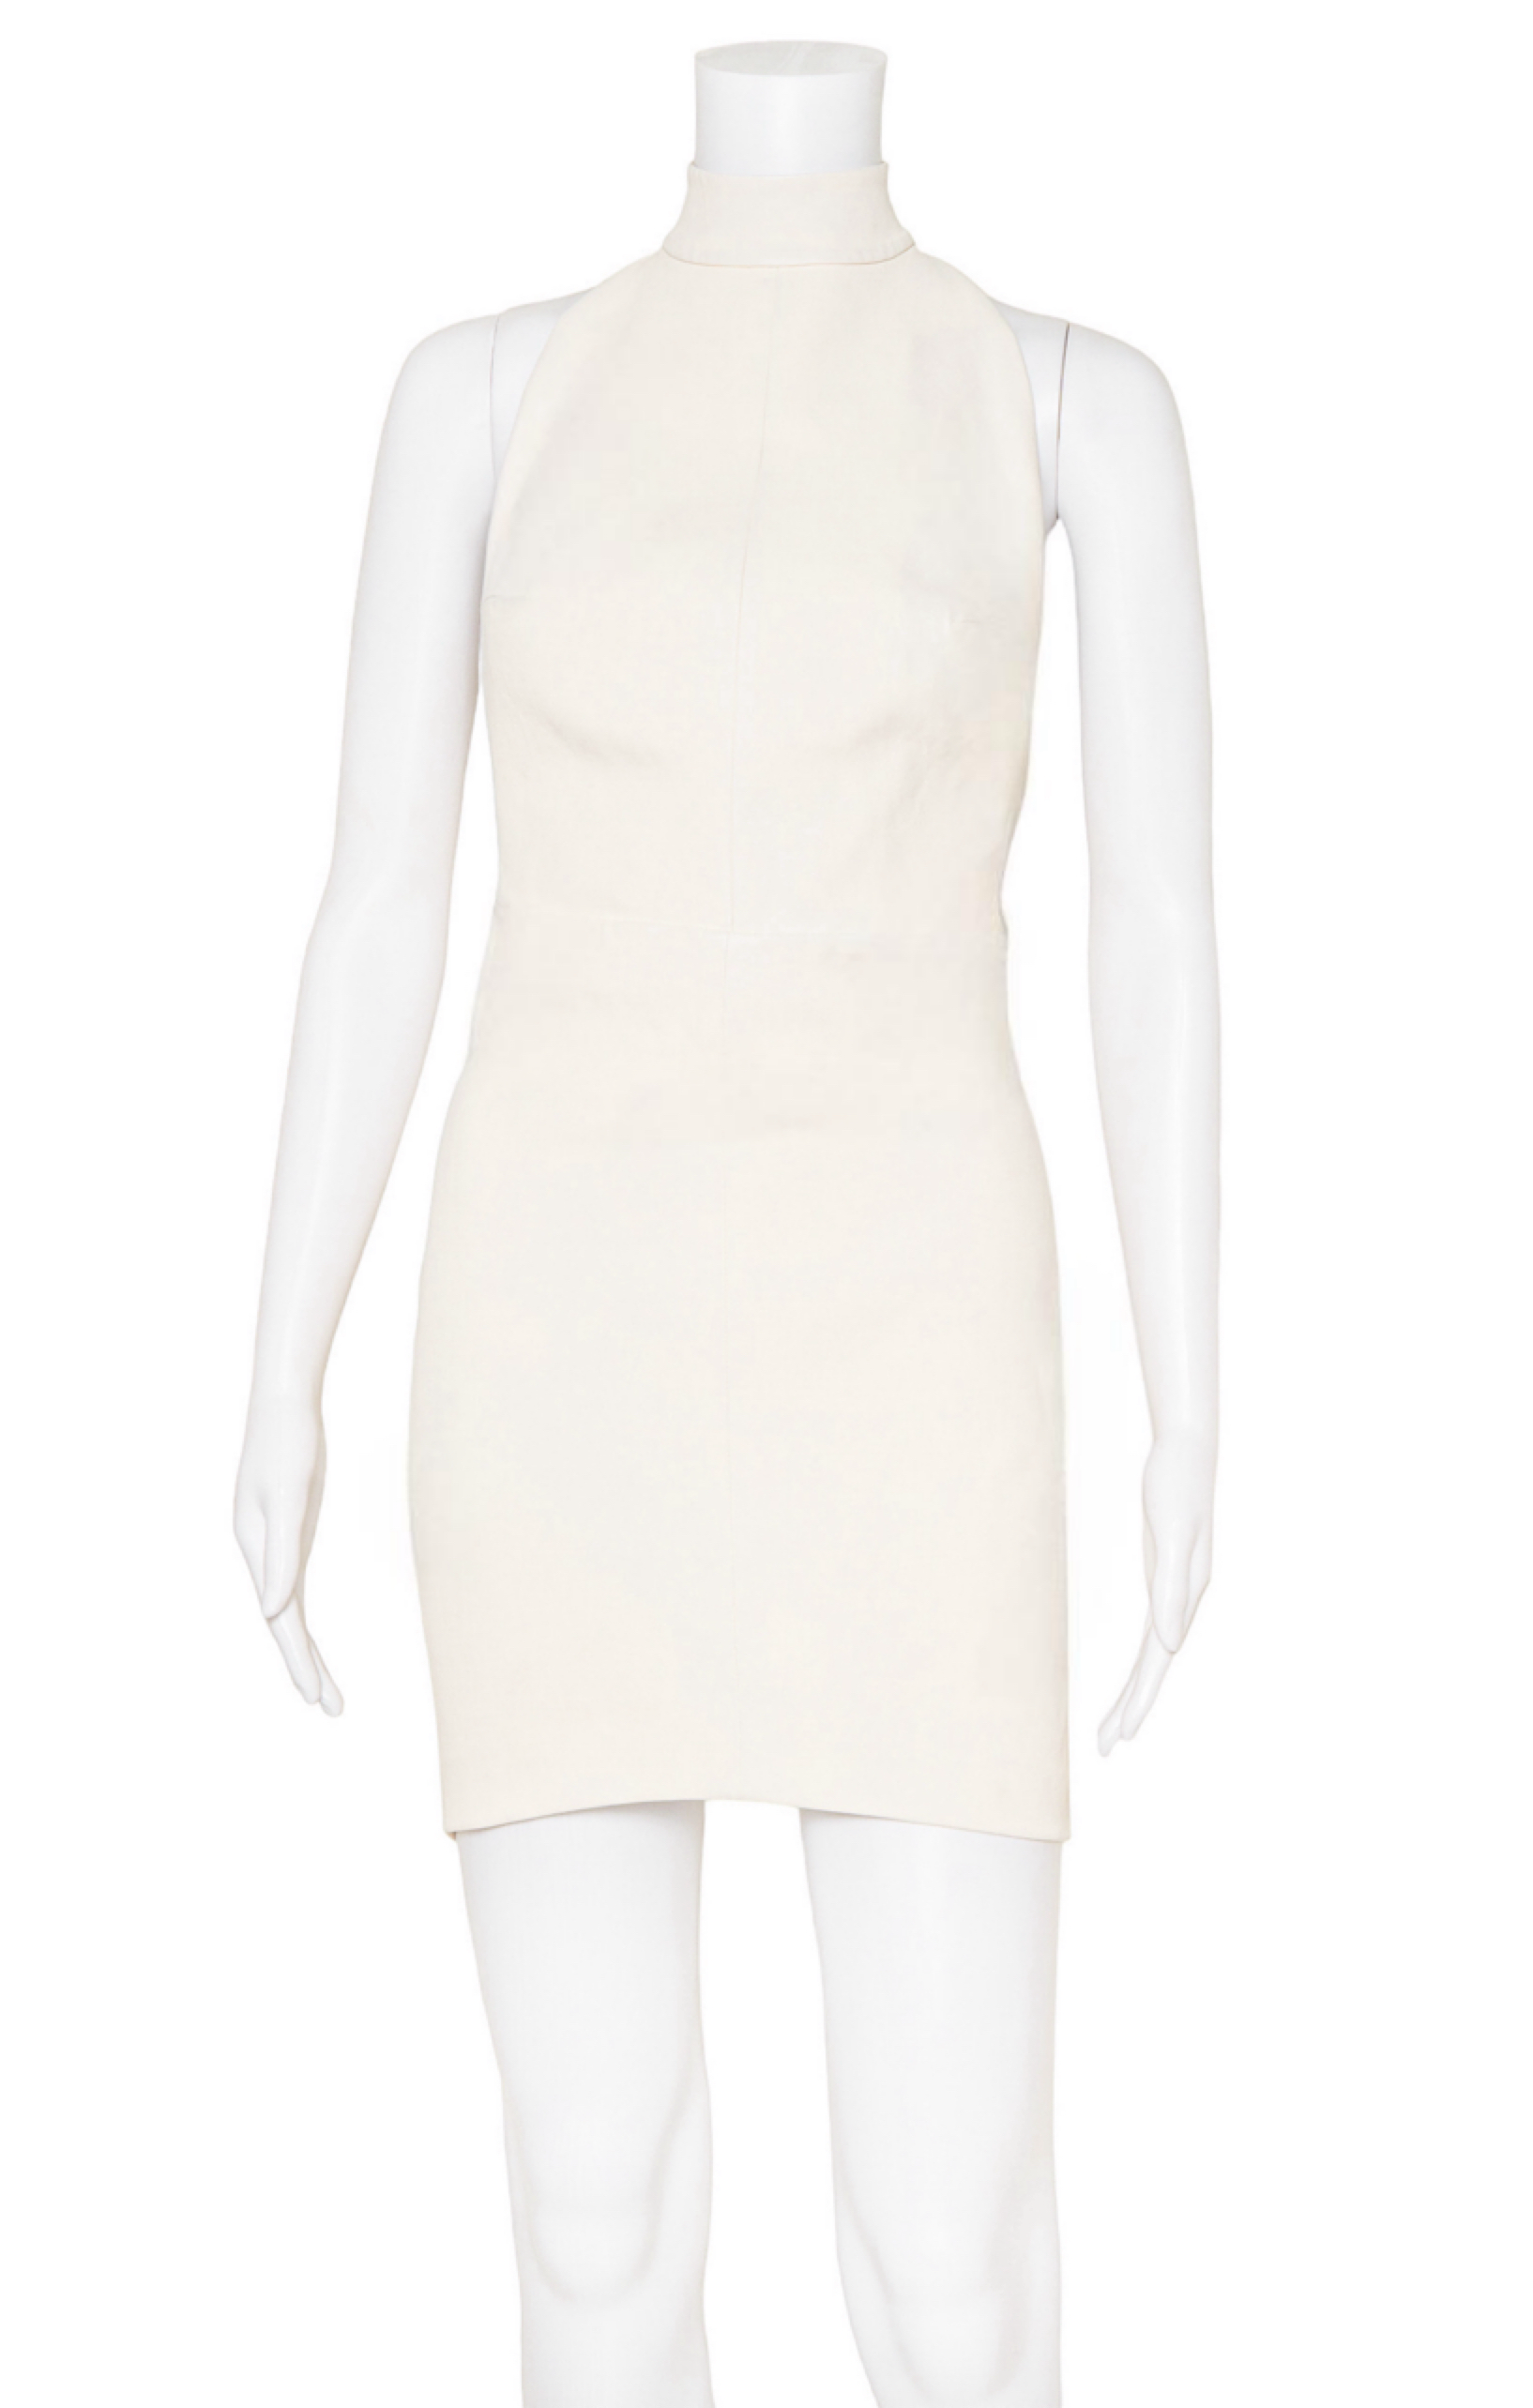 TAMARA MELLON (RARE) Dress Size: IT 44 / Comparable to US 6-8